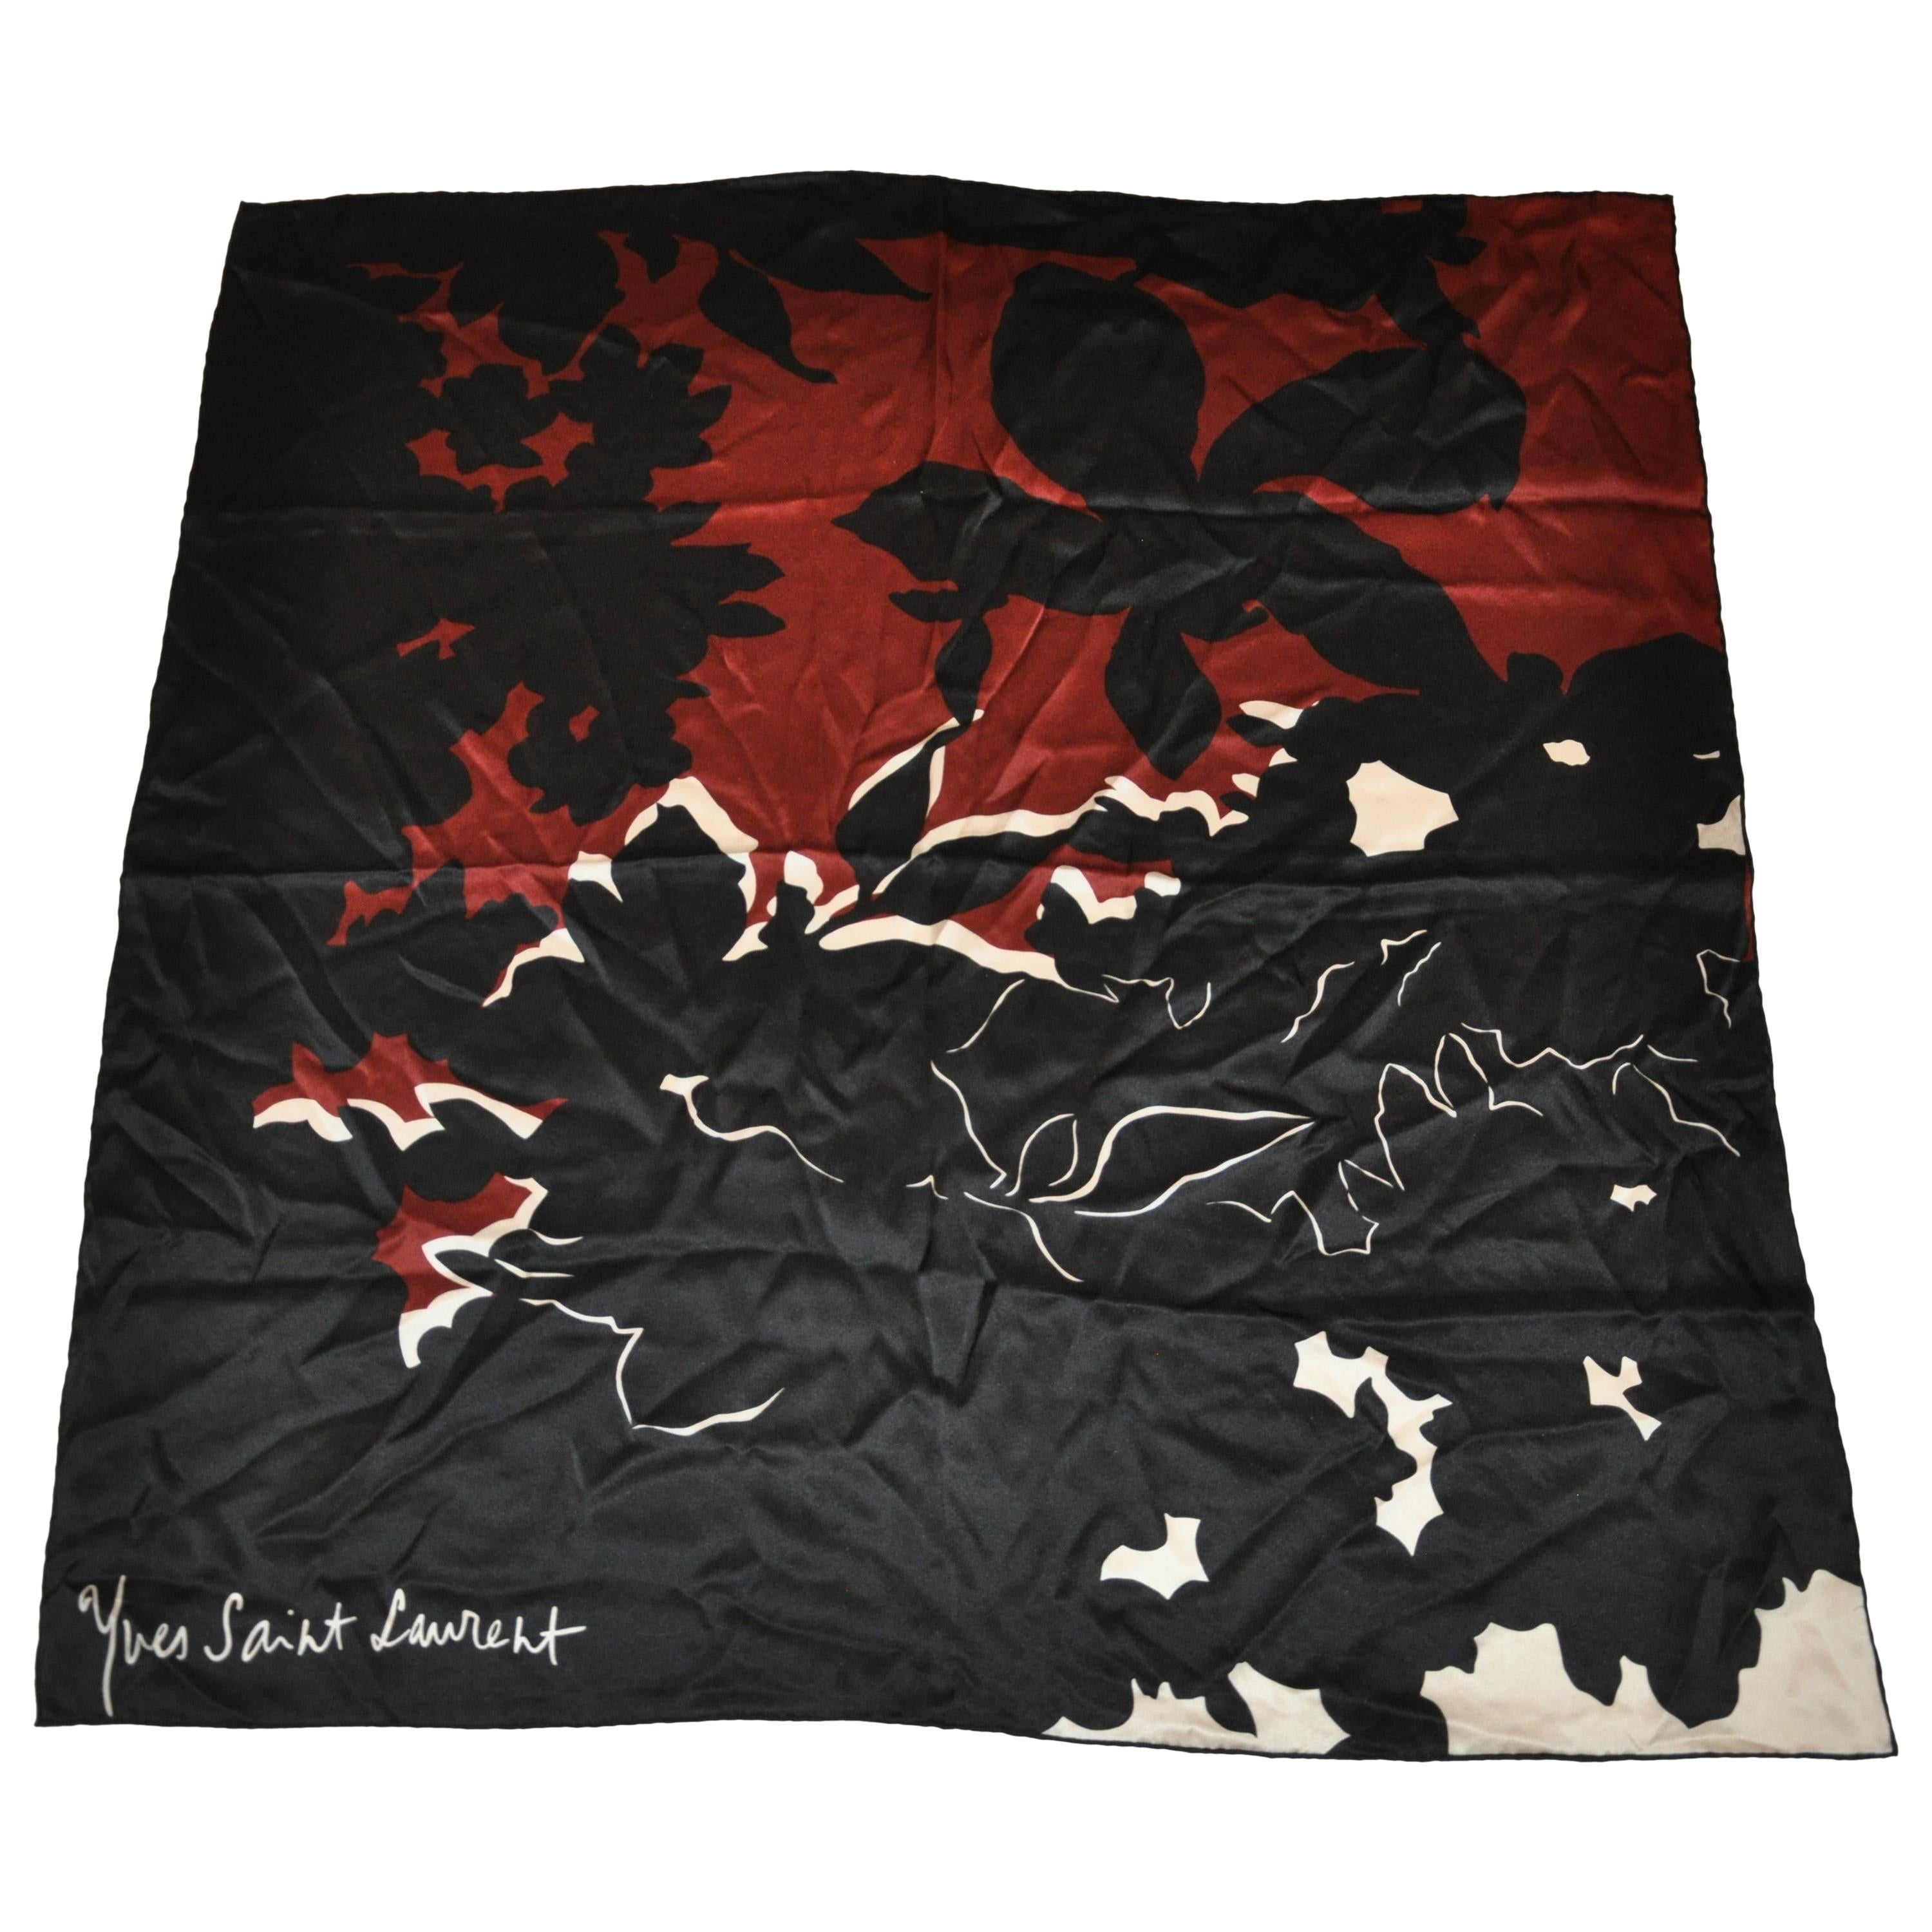 Yves Saint Laurent Whimsical Black, Ivory & Warm Brown Silk Jacquard Scarf.